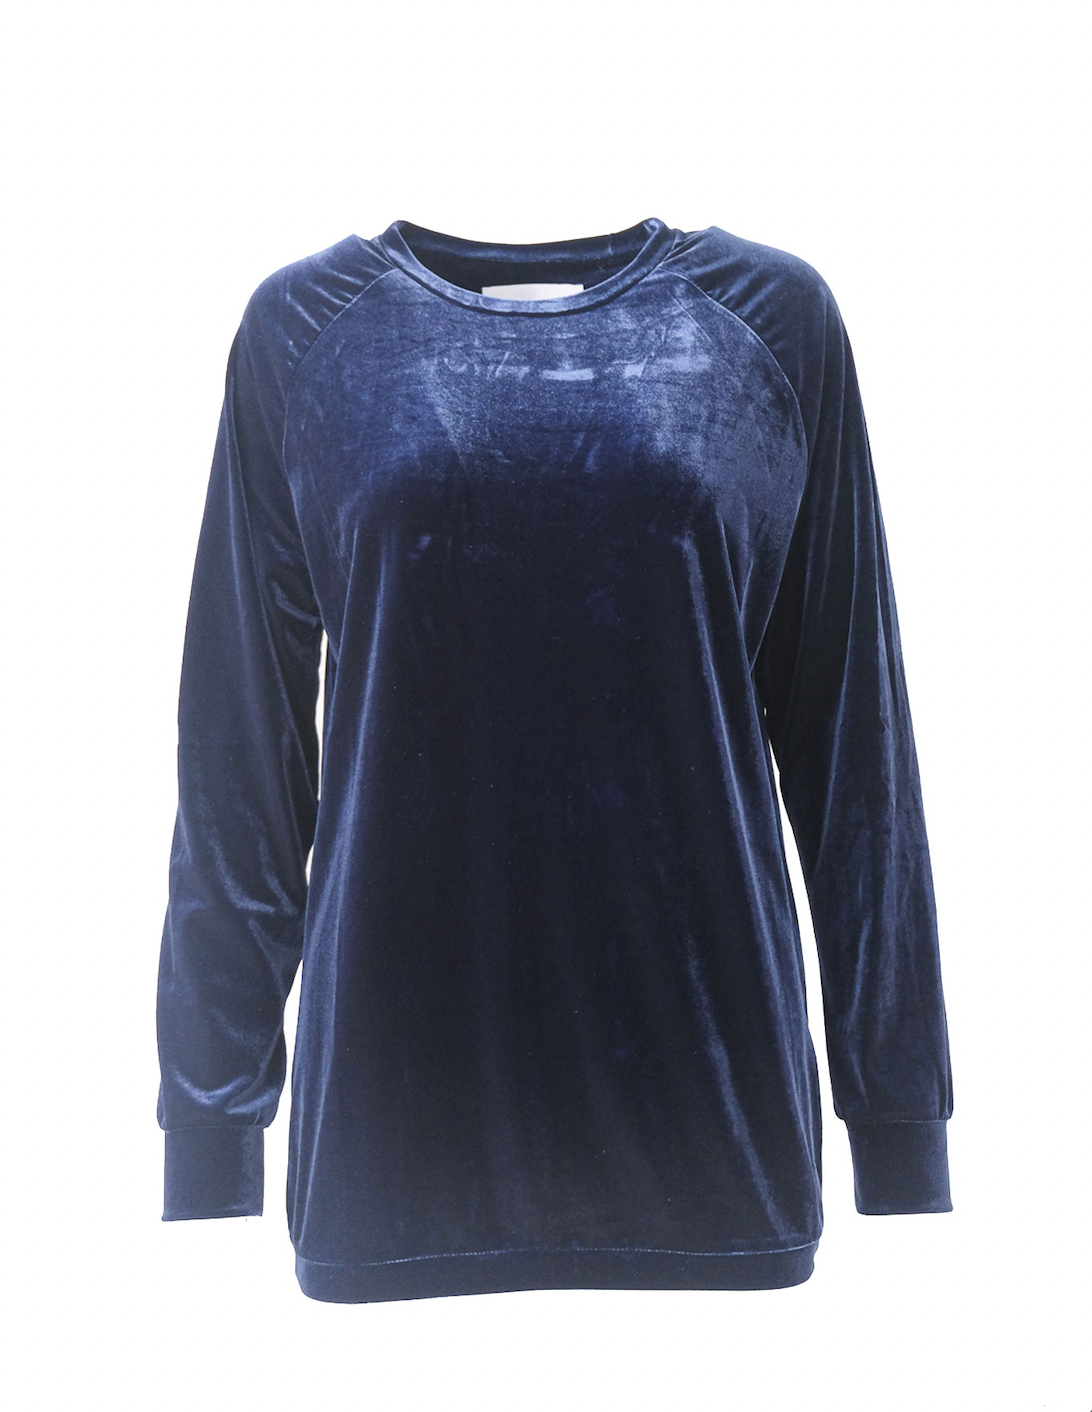 FLORA - chenille sweatshirt in blue